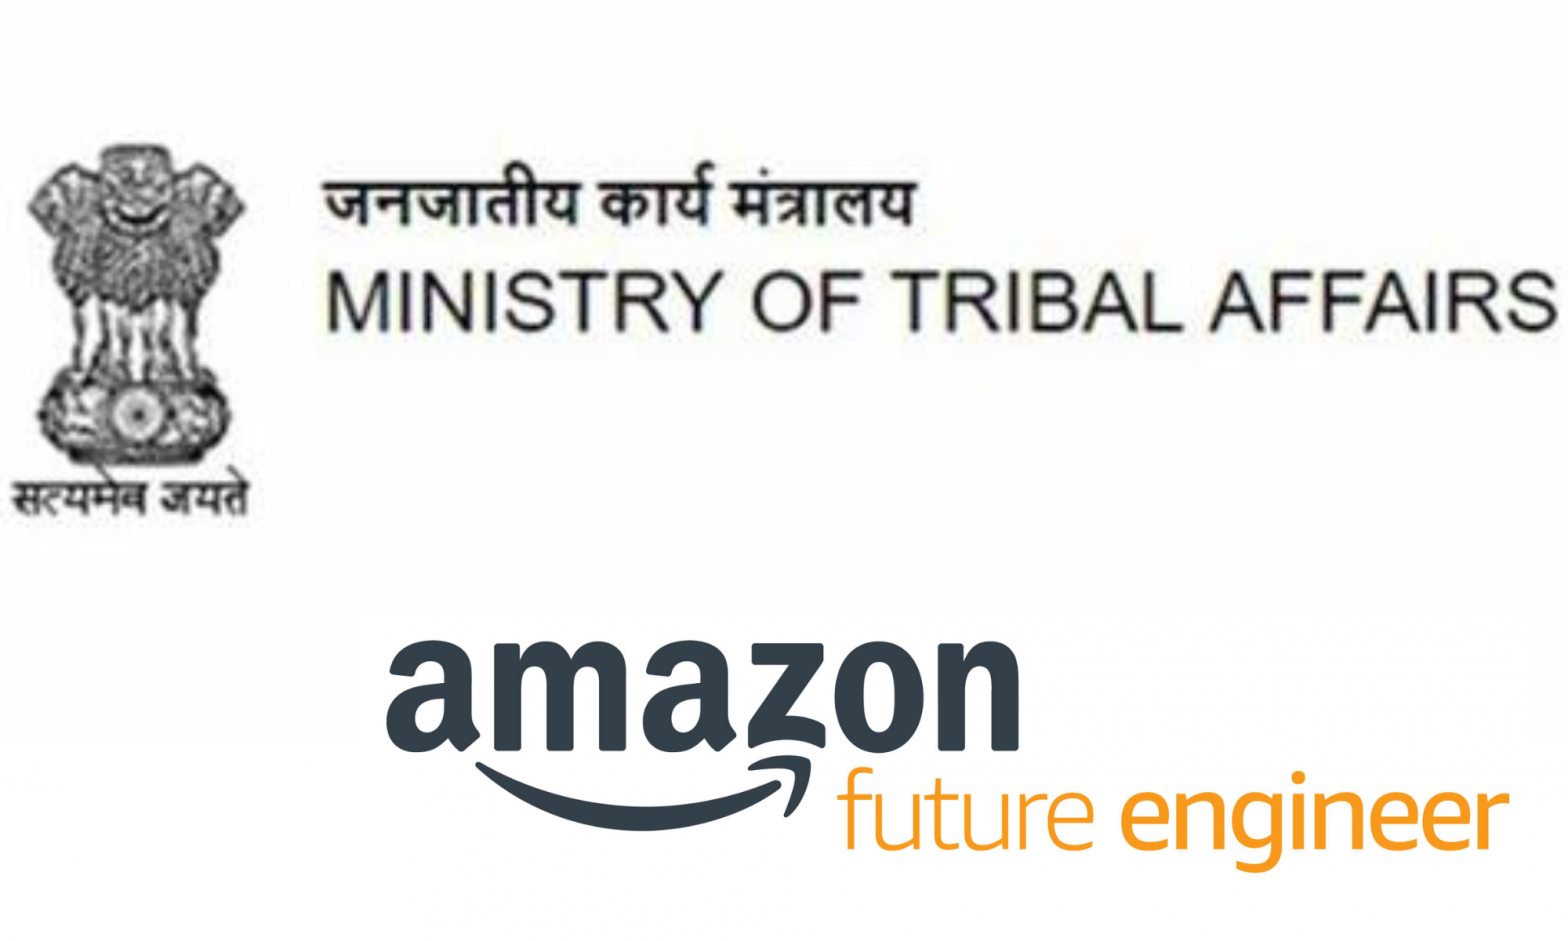 Future engineer program: Tribal Ministry, Amazon collaborate